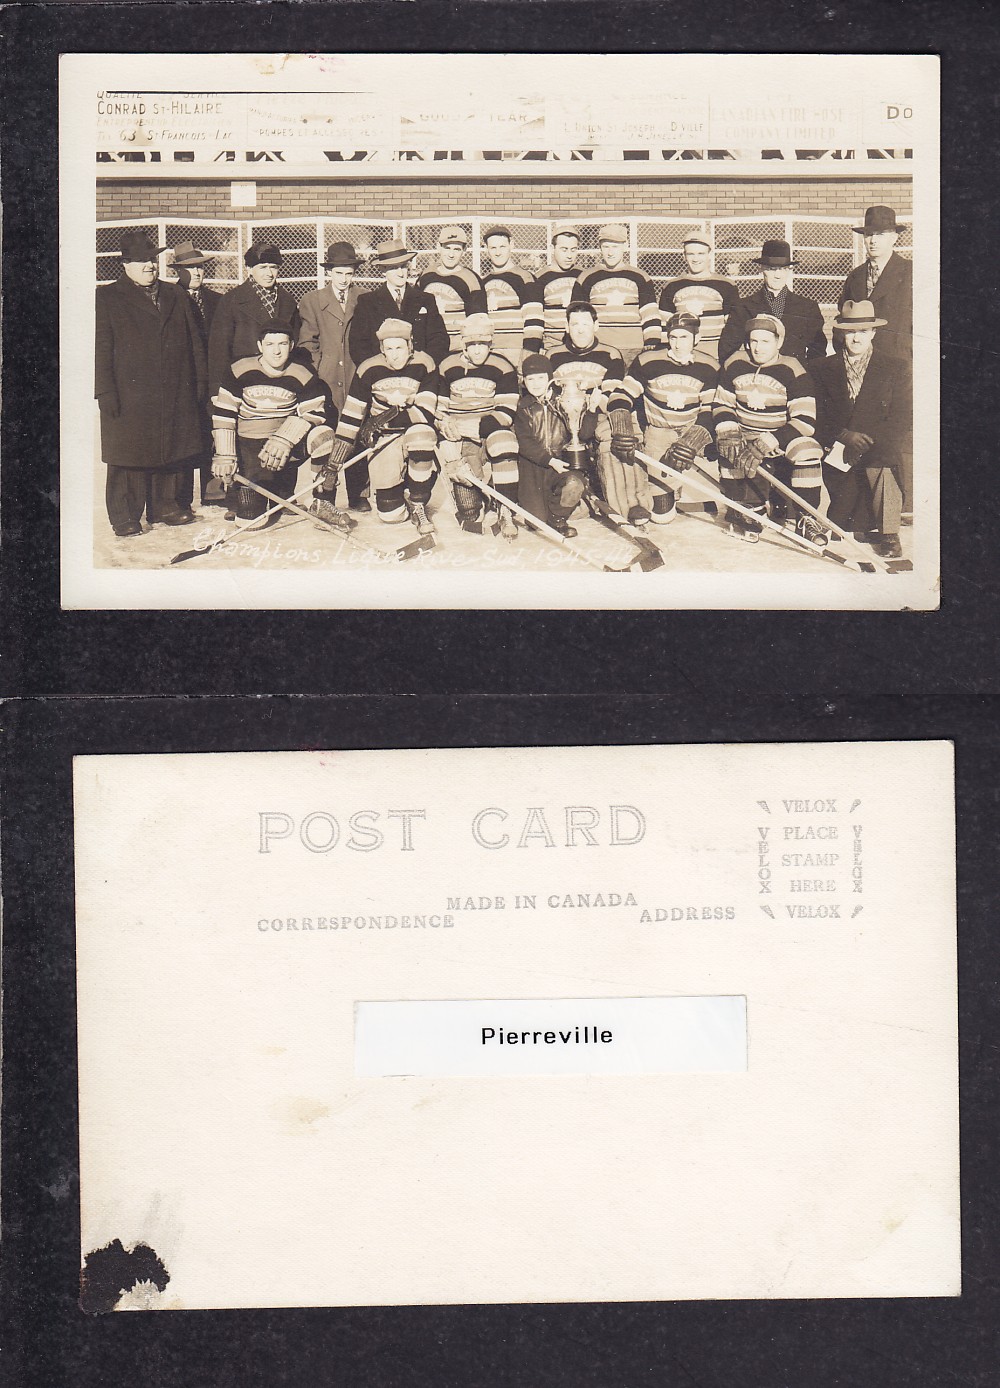 1945-46 PIERREVILLE HOCKEY TEAM POST CARD photo